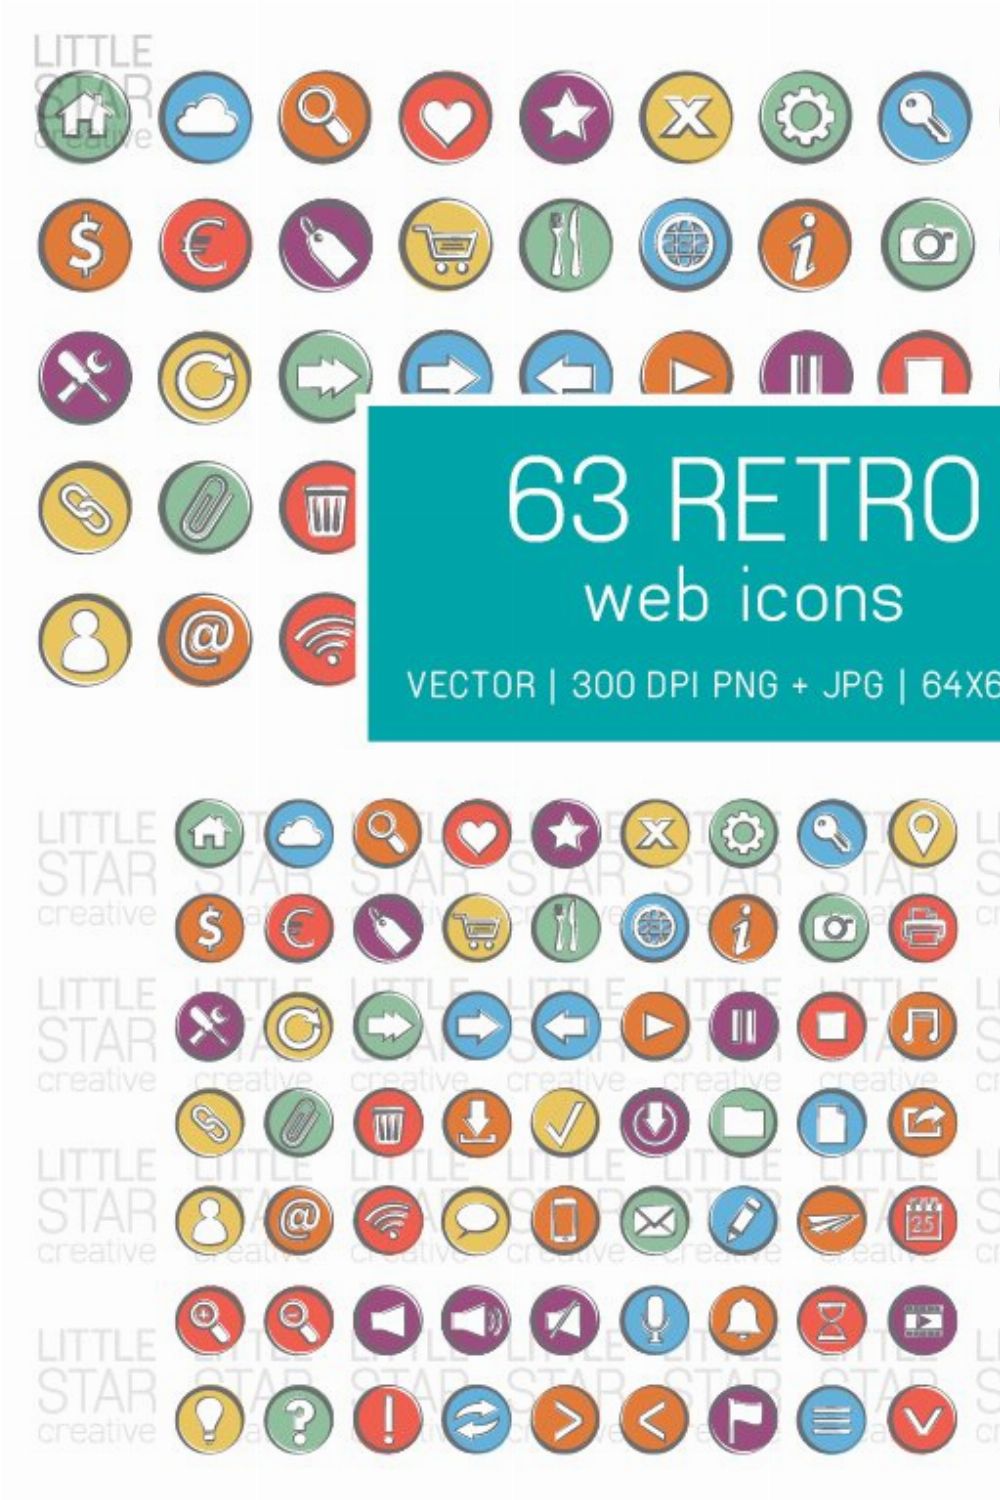 Retro Web Icons pinterest preview image.